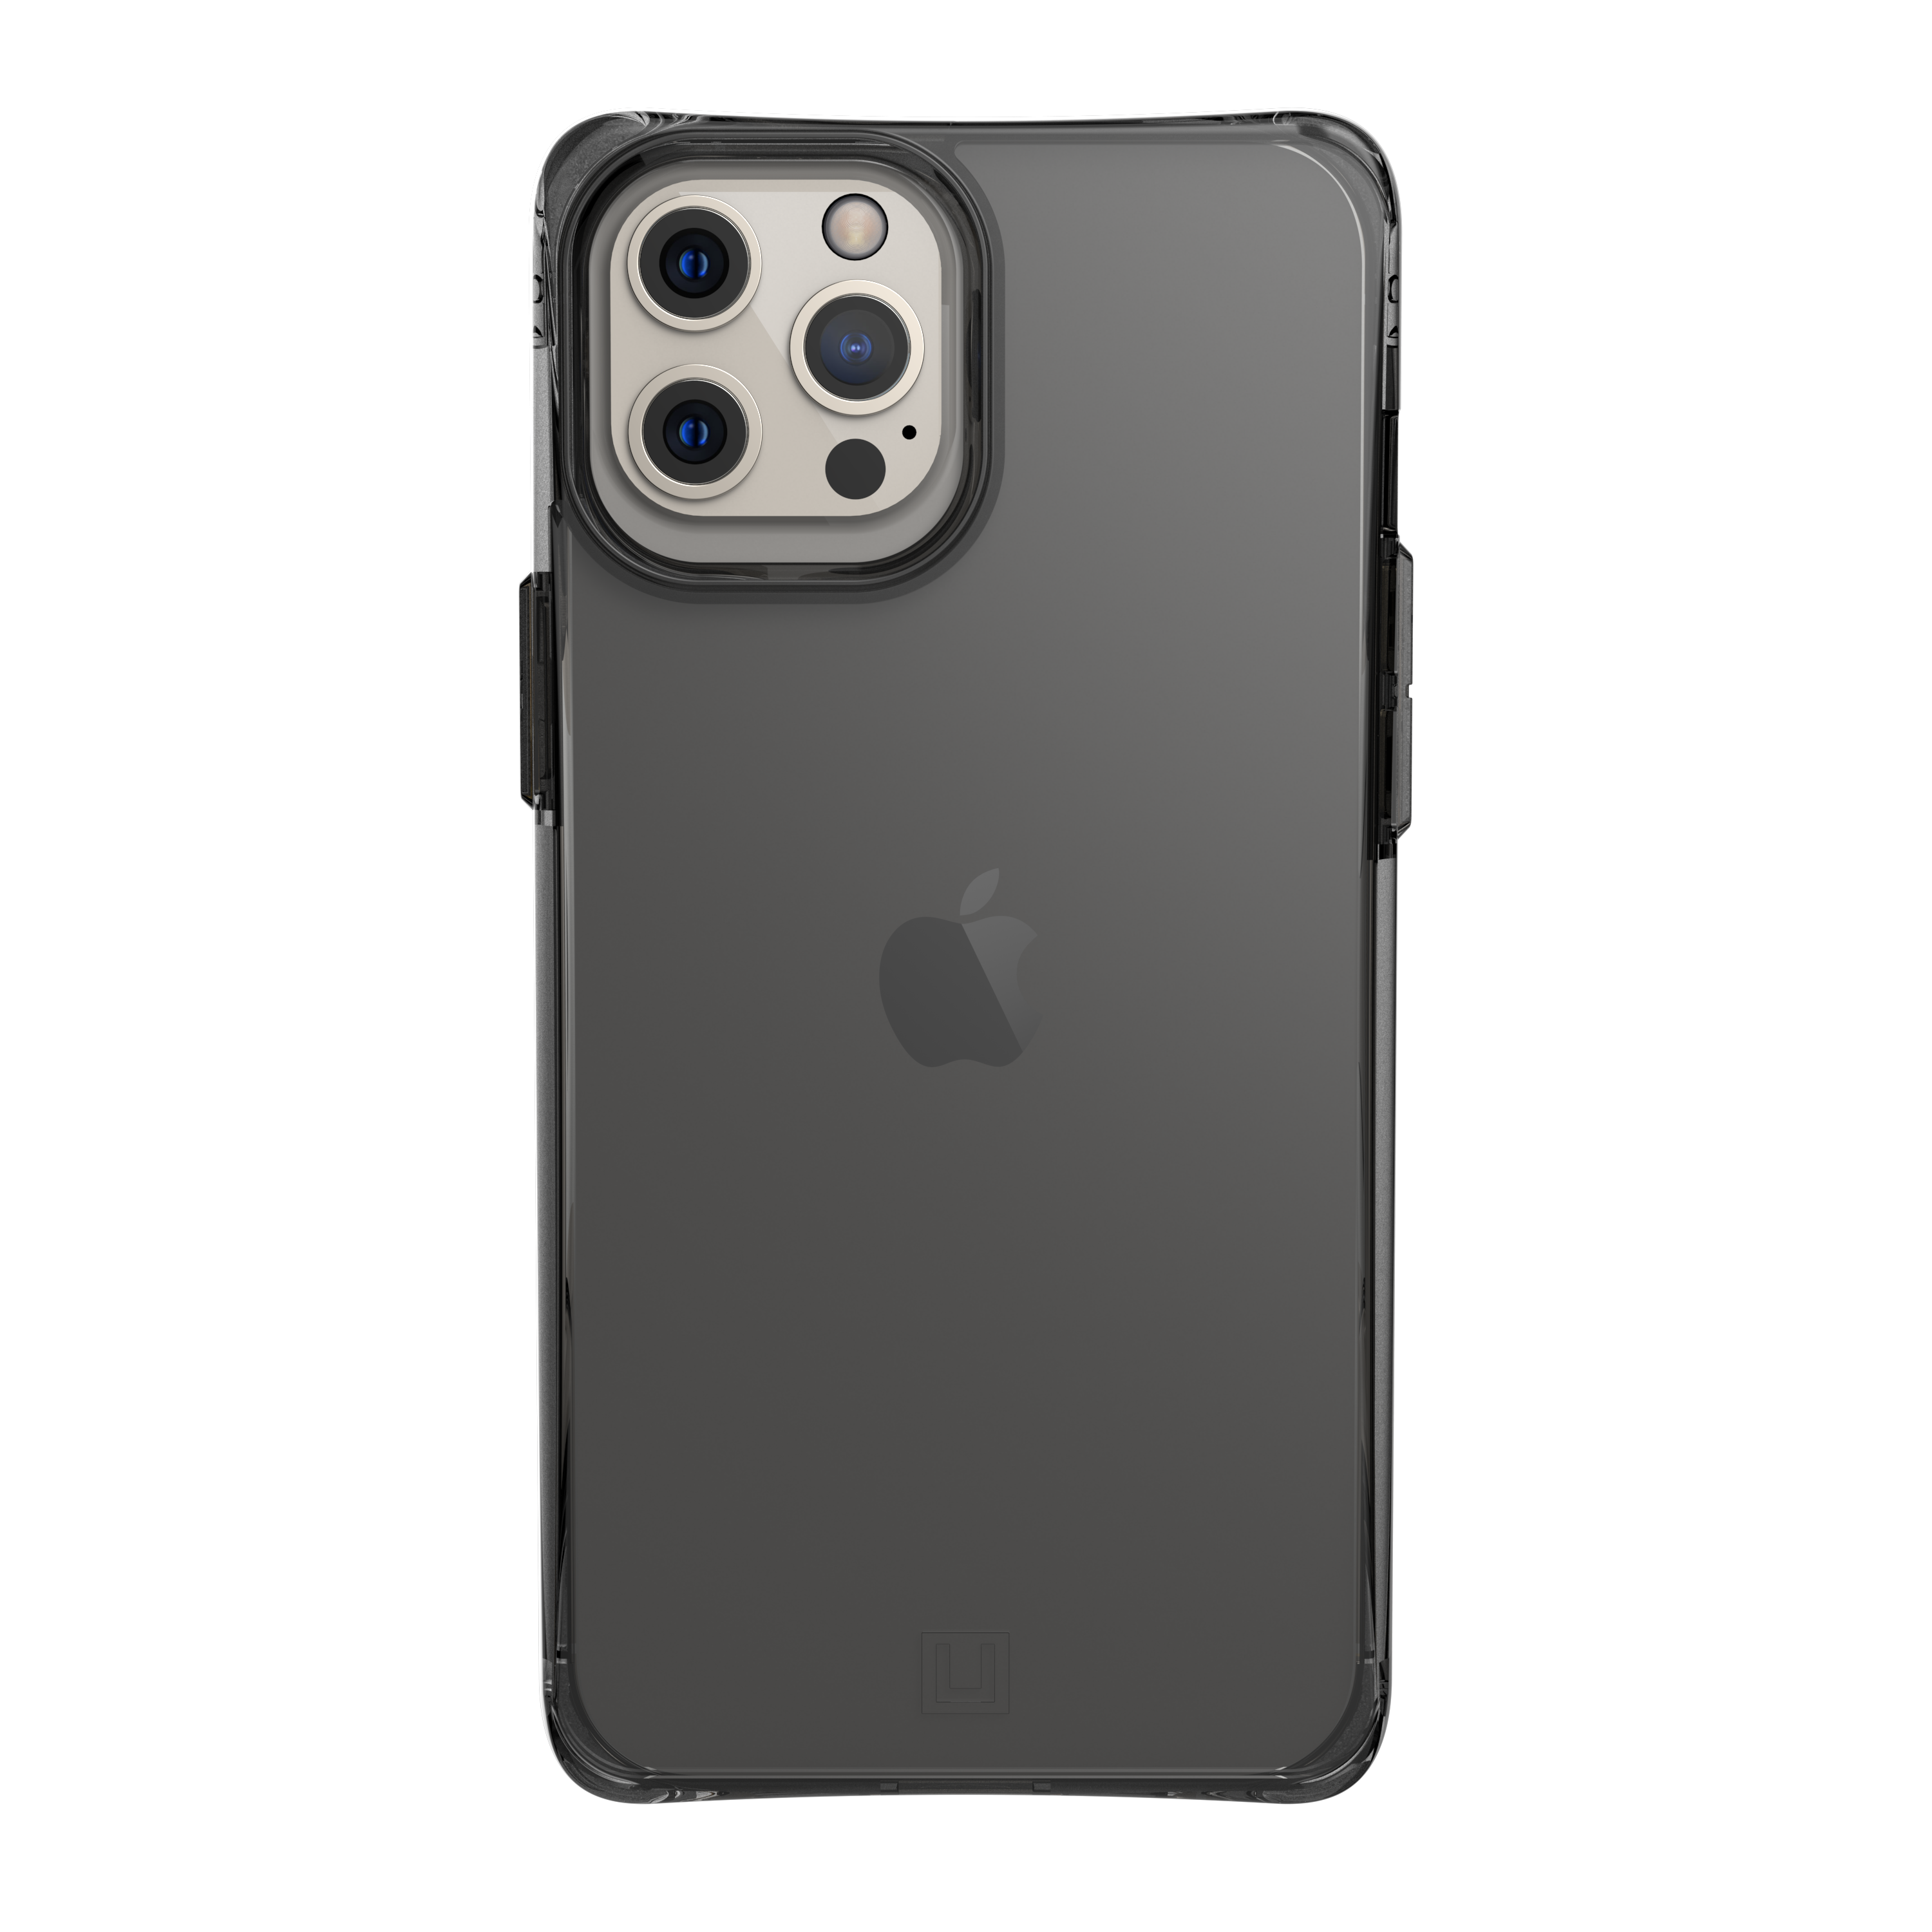 [U] Mouve Series iPhone 12 Pro Max 5G Case